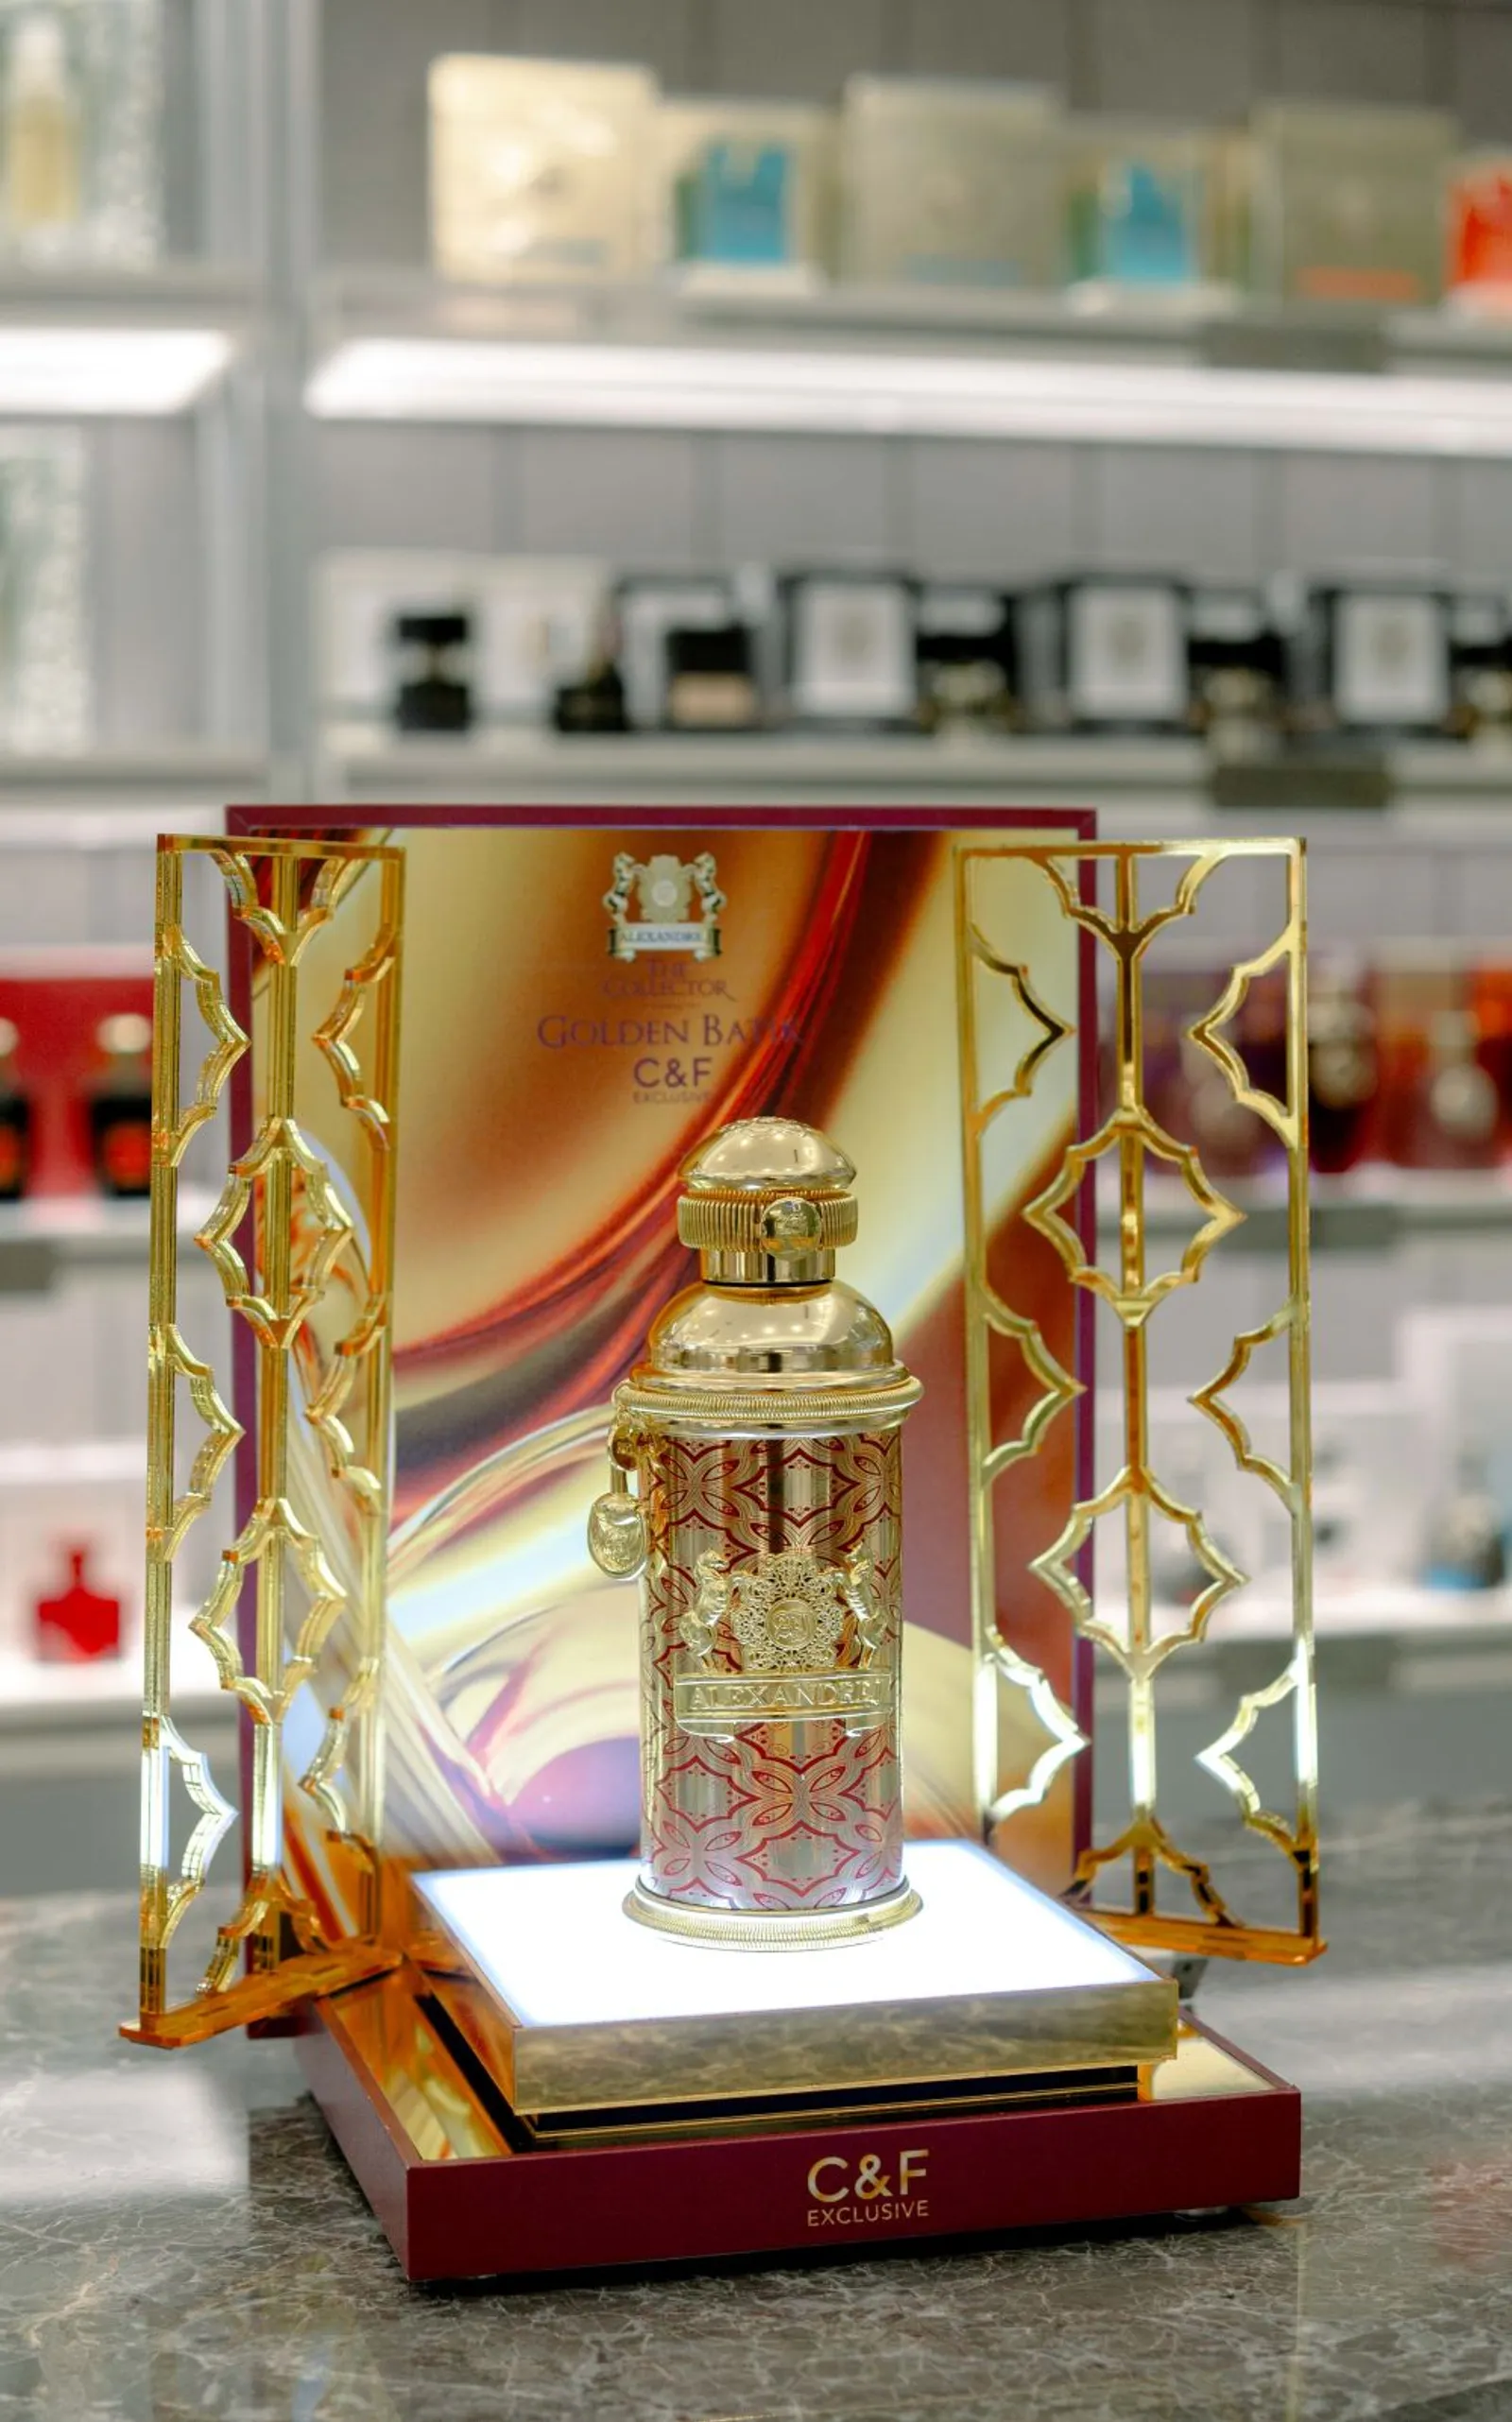 Golden Batik, Parfum Kolaborasi C&F dan Alexandre J